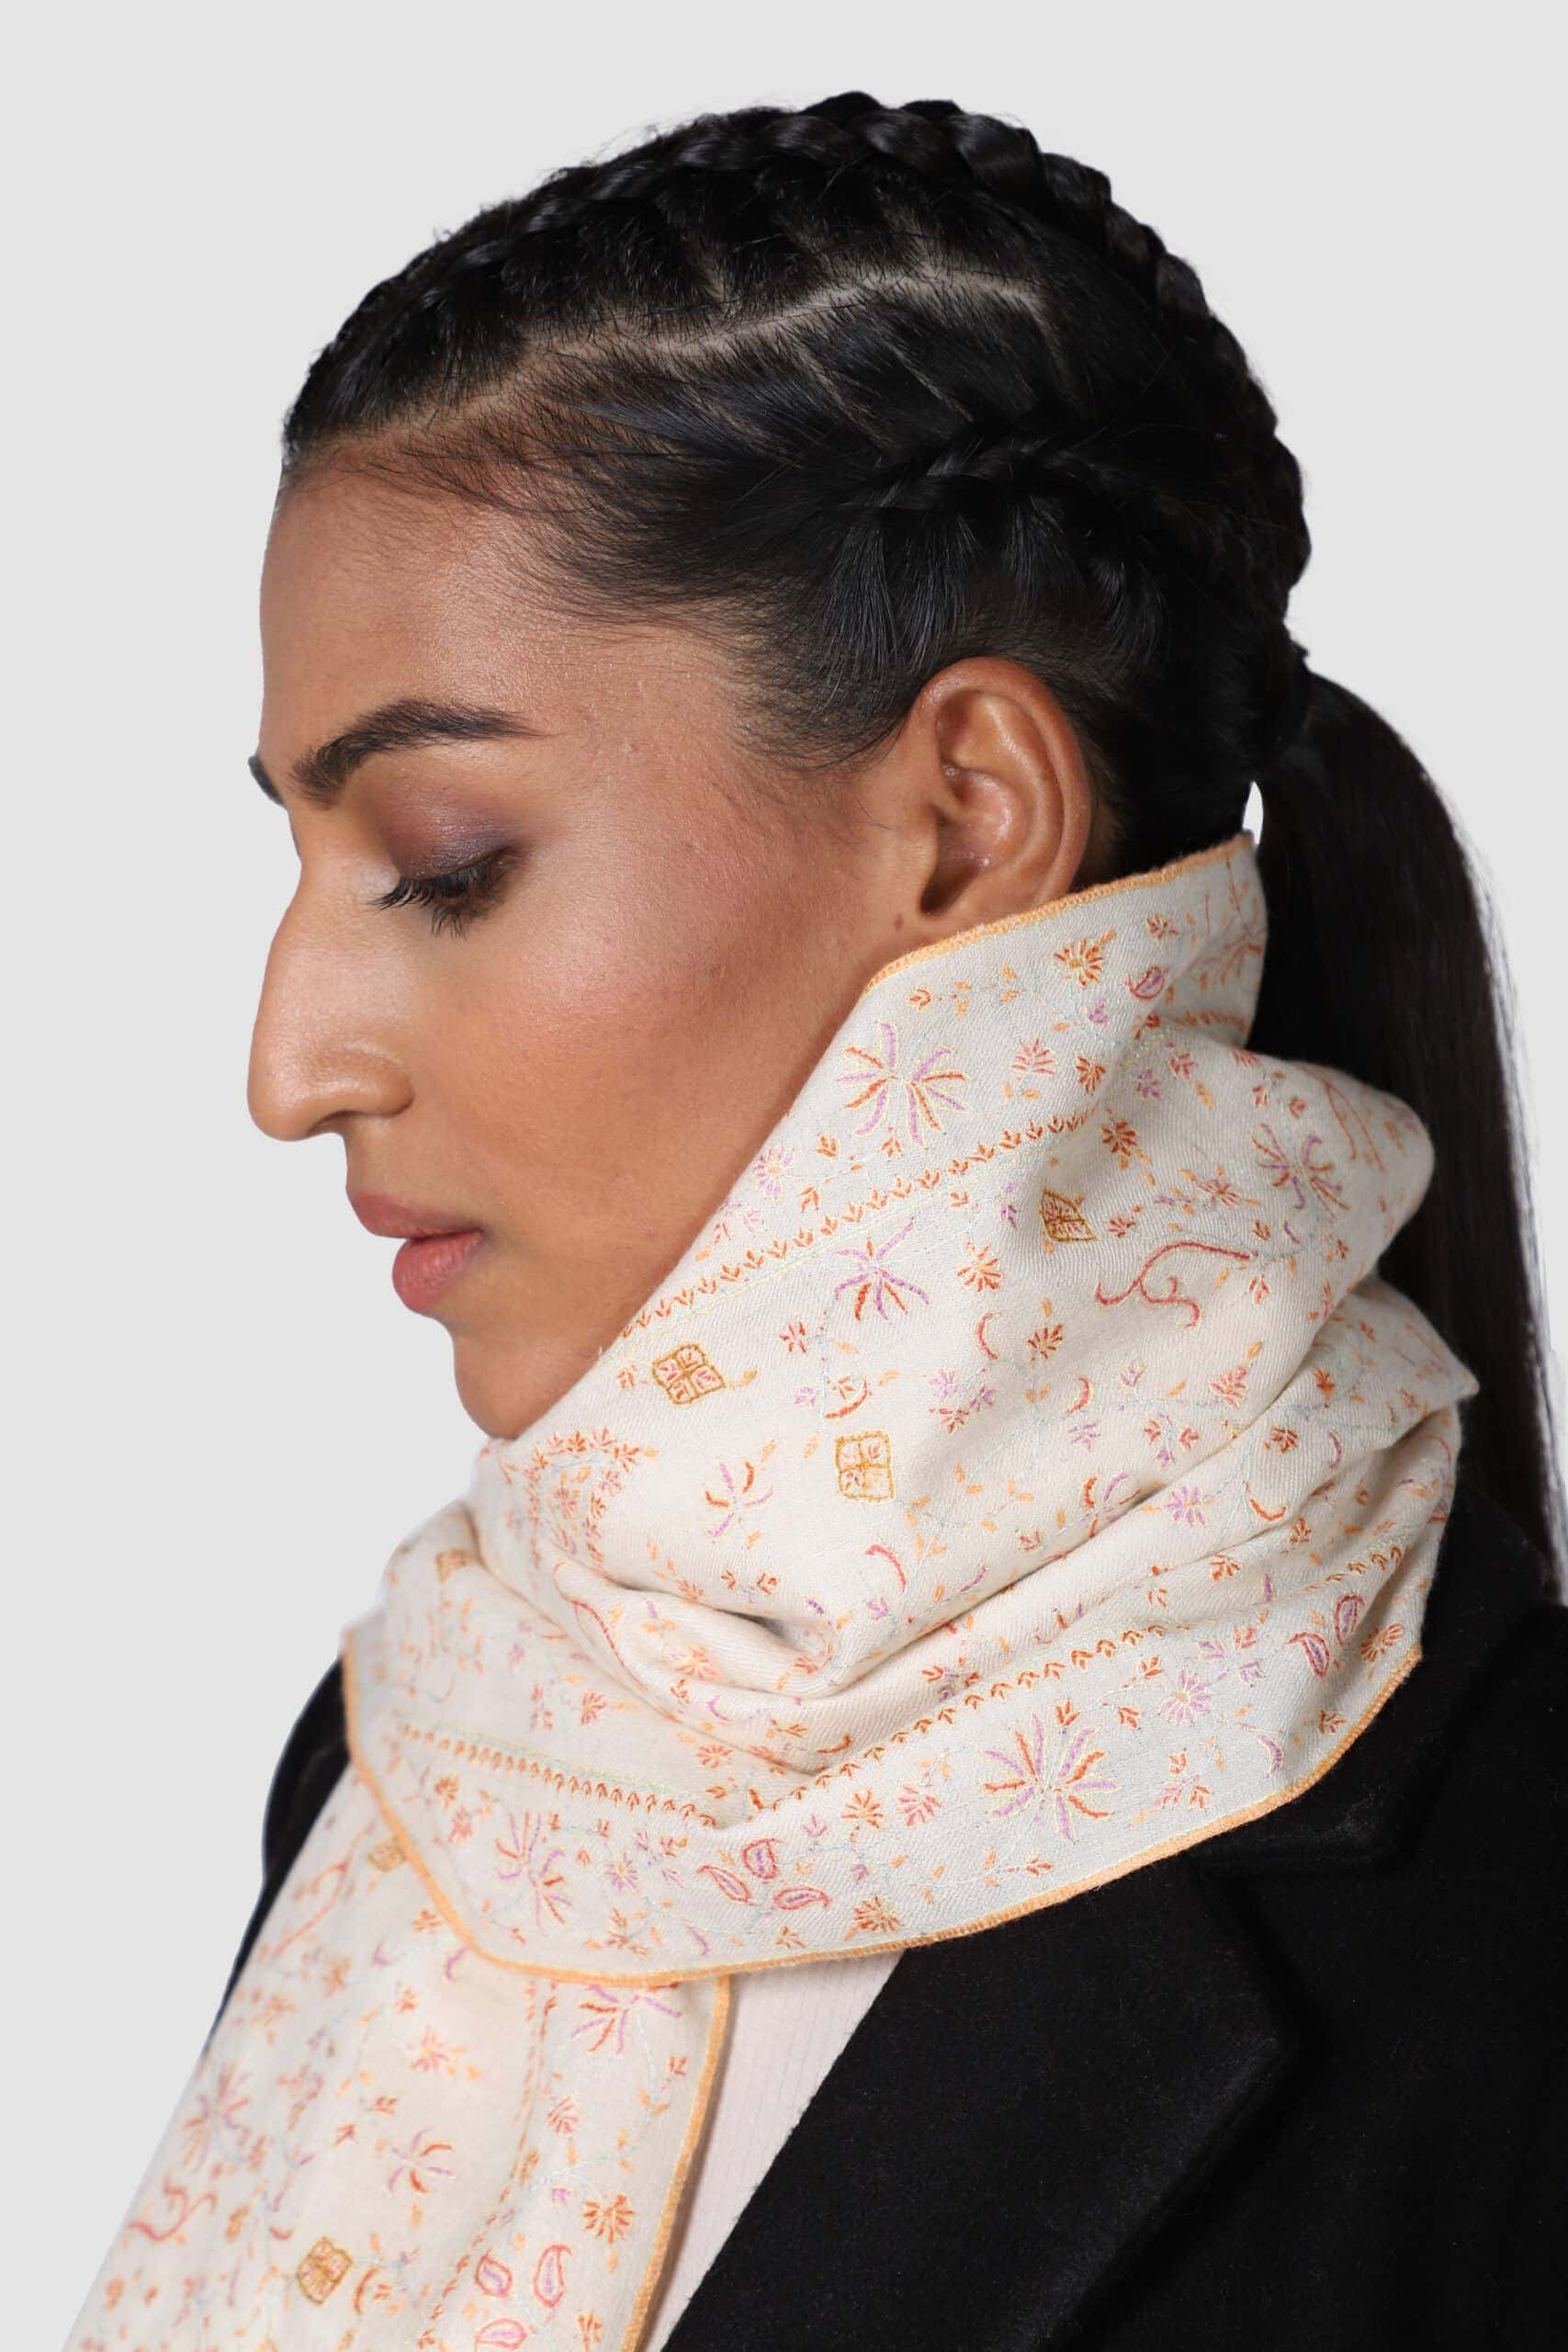 louis scarf womens vintage